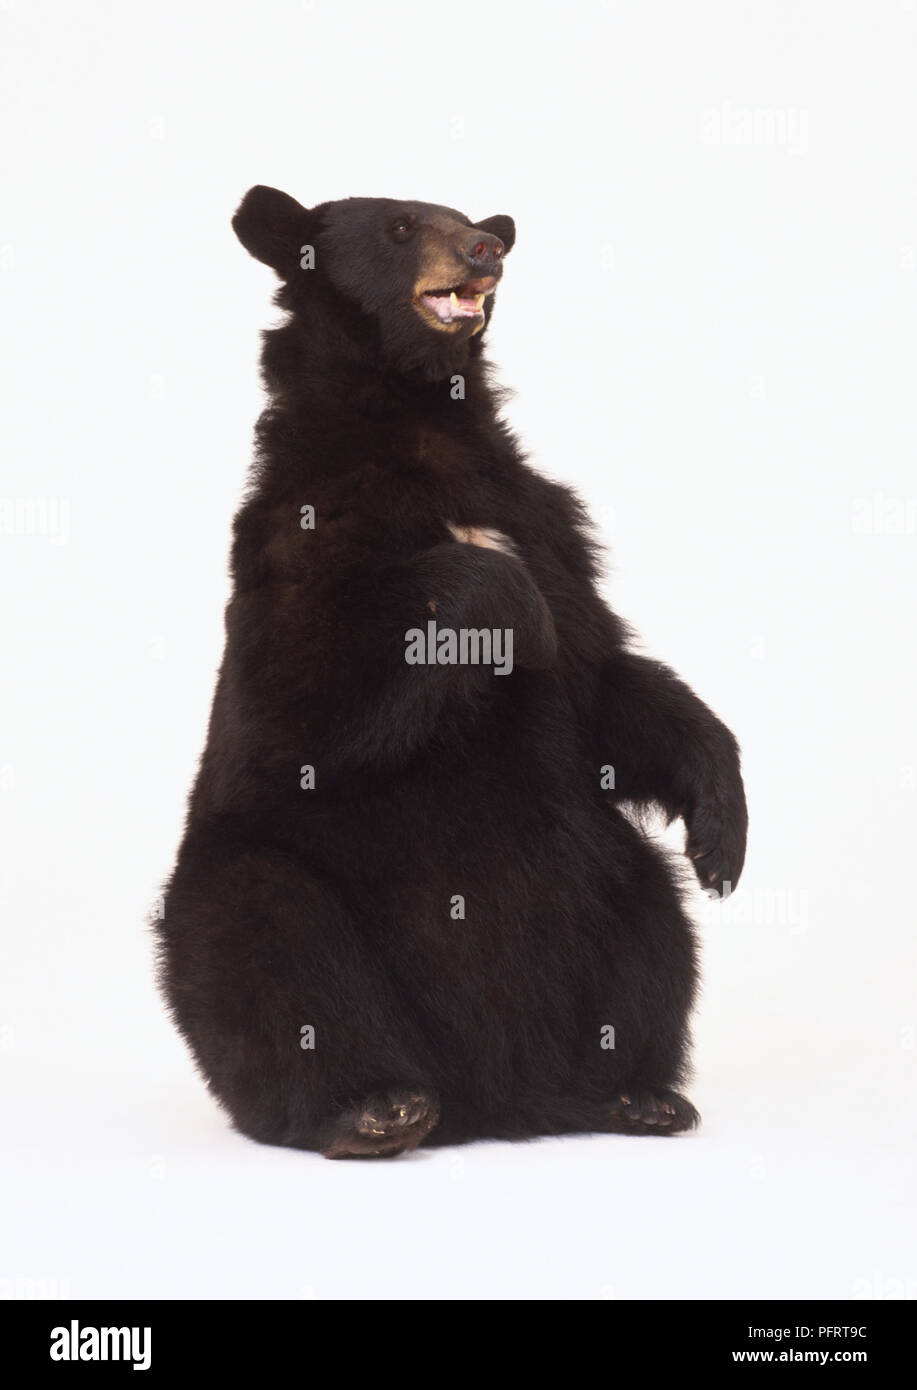 American black bear (Ursus americanus) sitting upright, pointing at himself Stock Photo